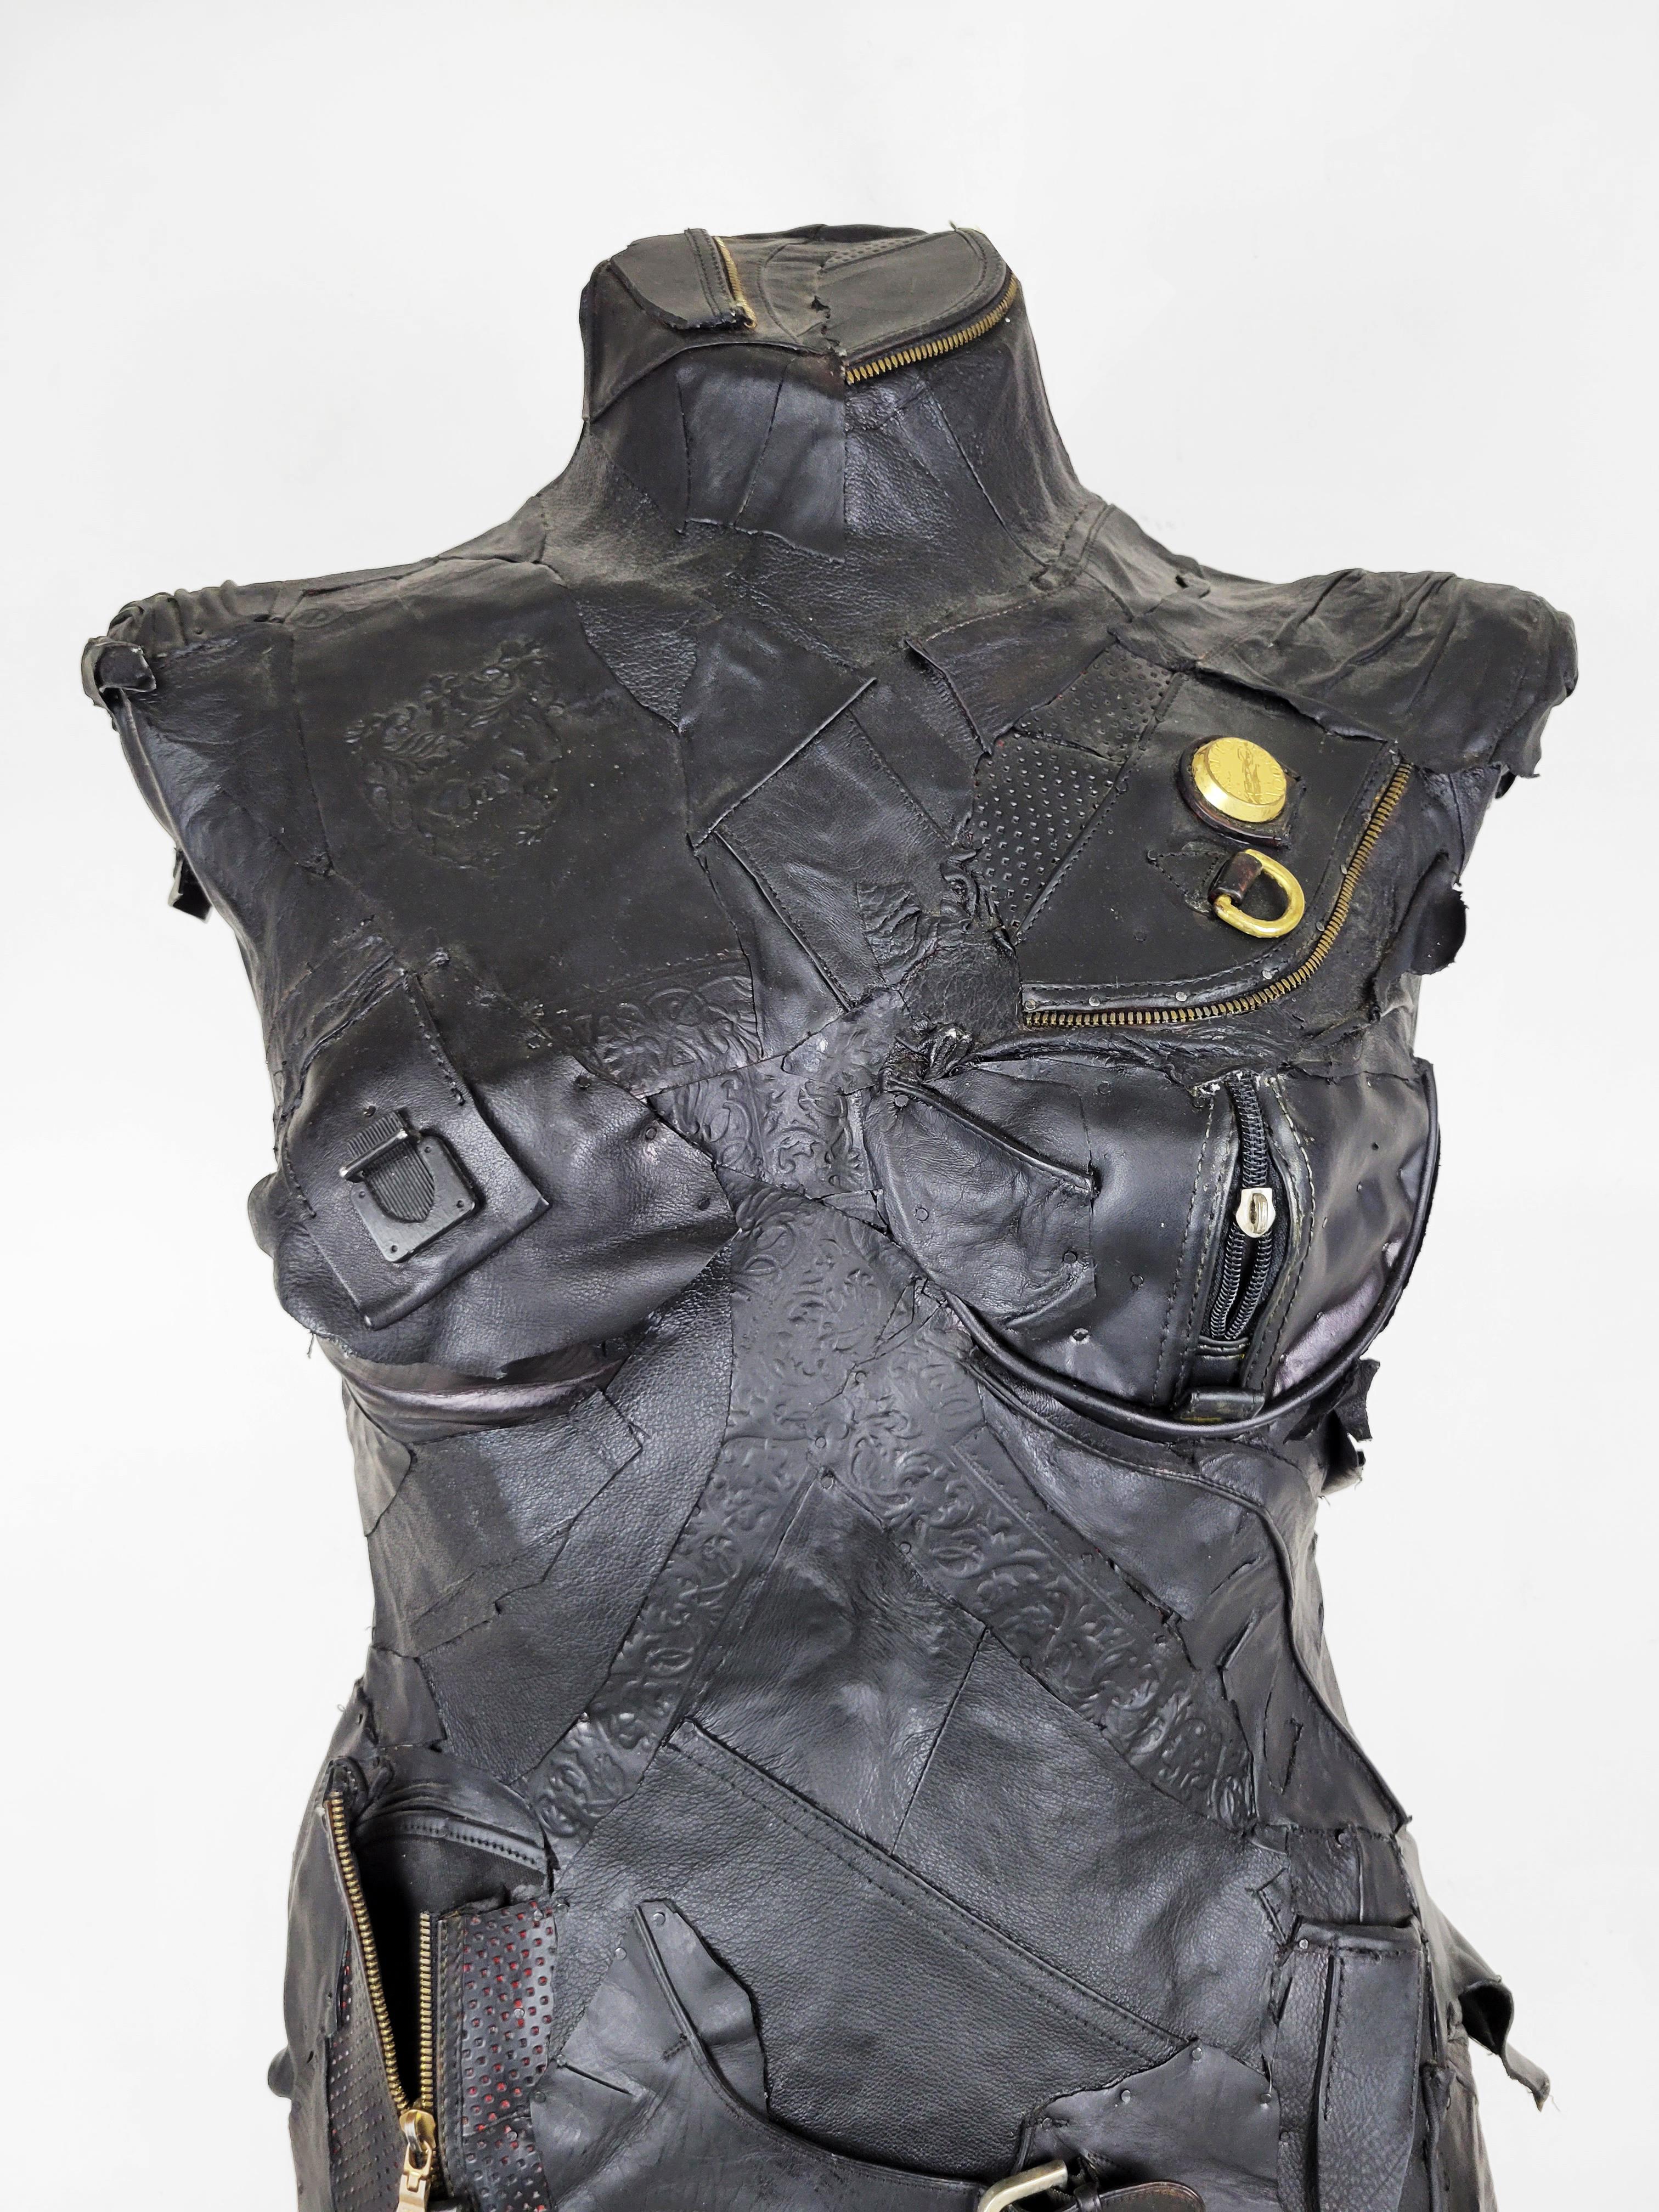 Feminist Contemporary Black/Silver Leather Metal Torso Sculpture - Defender 696 For Sale 3